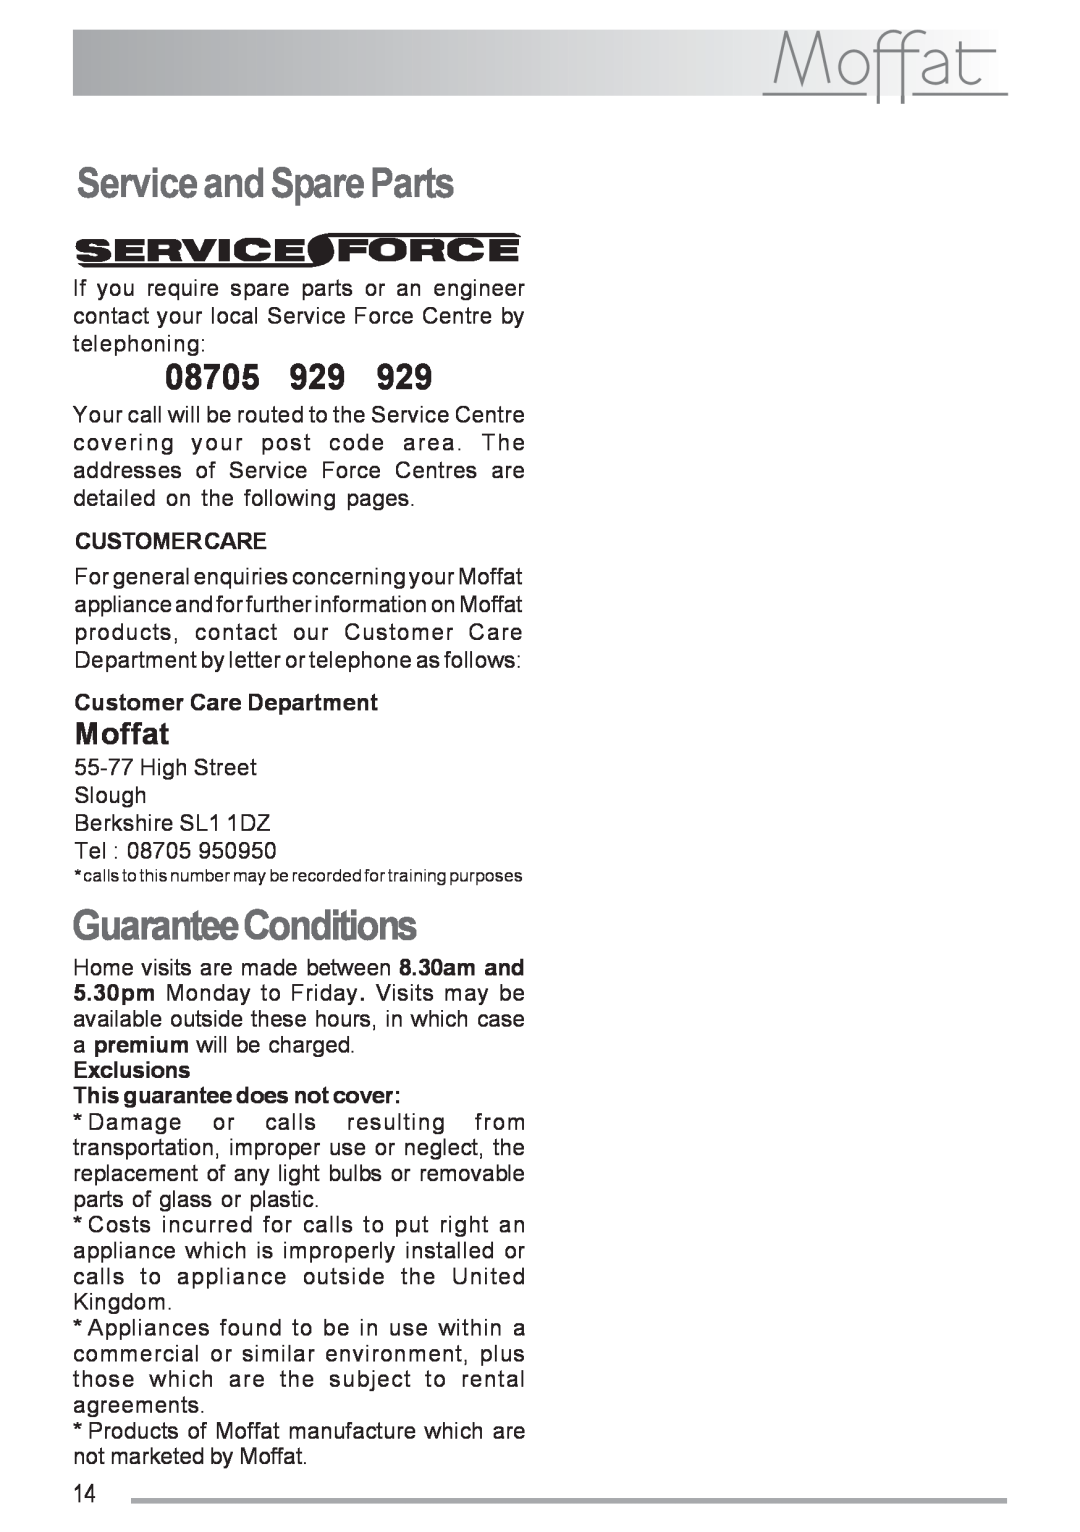 Moffat MSS 601 manual Service and Spare Parts, GuaranteeConditions, 08705, Moffat, Customercare, Customer Care Department 